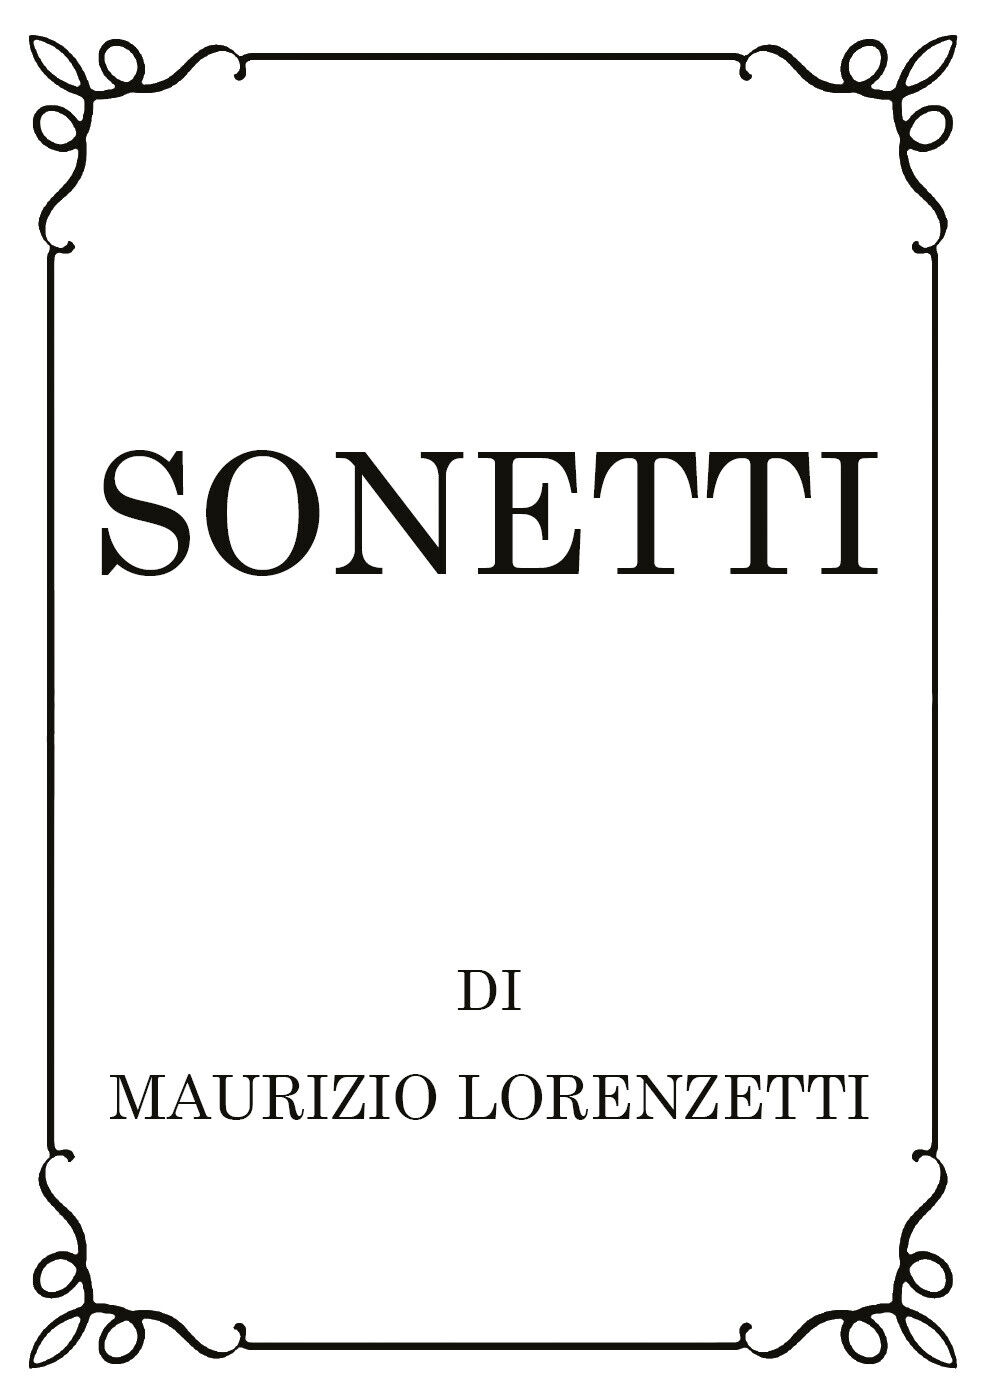 Sonetti di Maurizio Lorenzetti,  2019,  Youcanprint